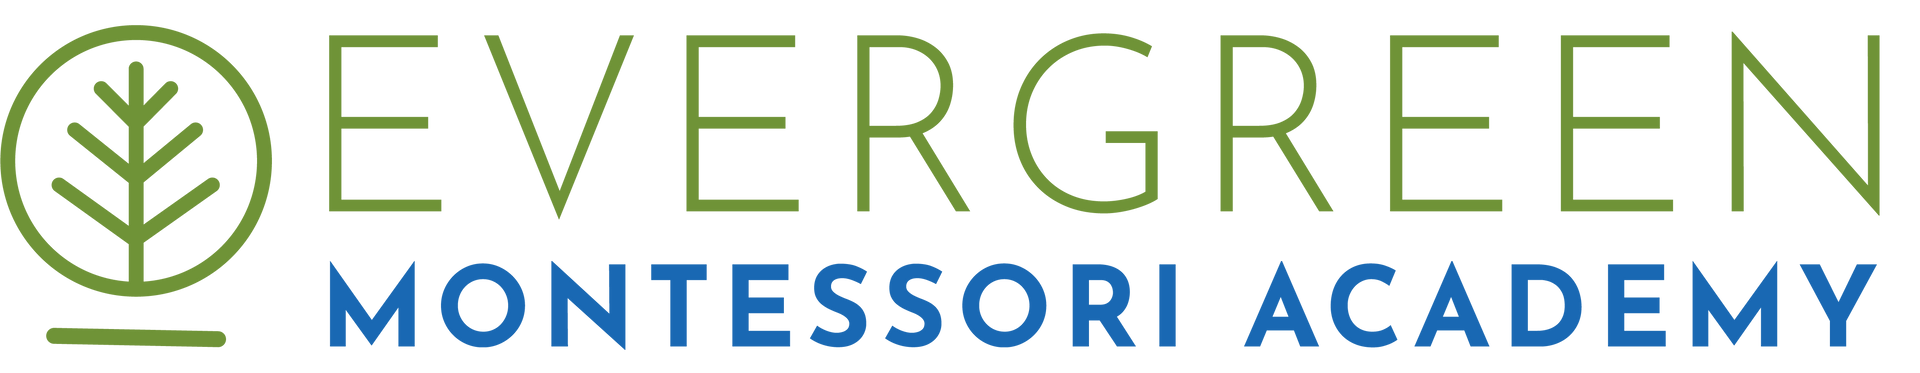 Evergreen Montessori Academy Logo